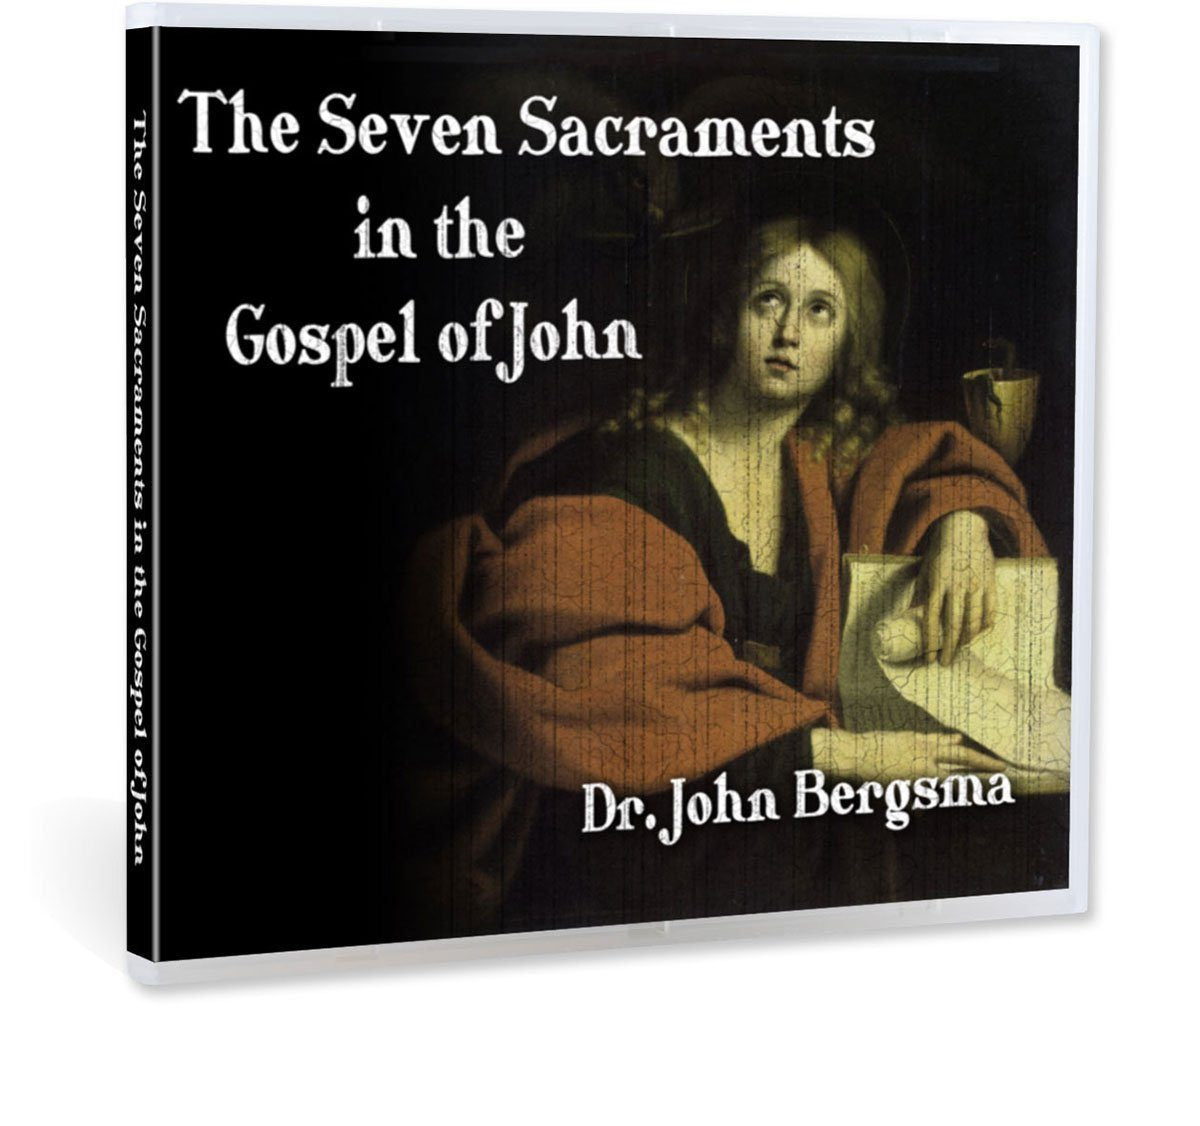 Dr. John Bergsma shows how the Apostle John has strewn the seven sacraments throughout his gospel (CD).